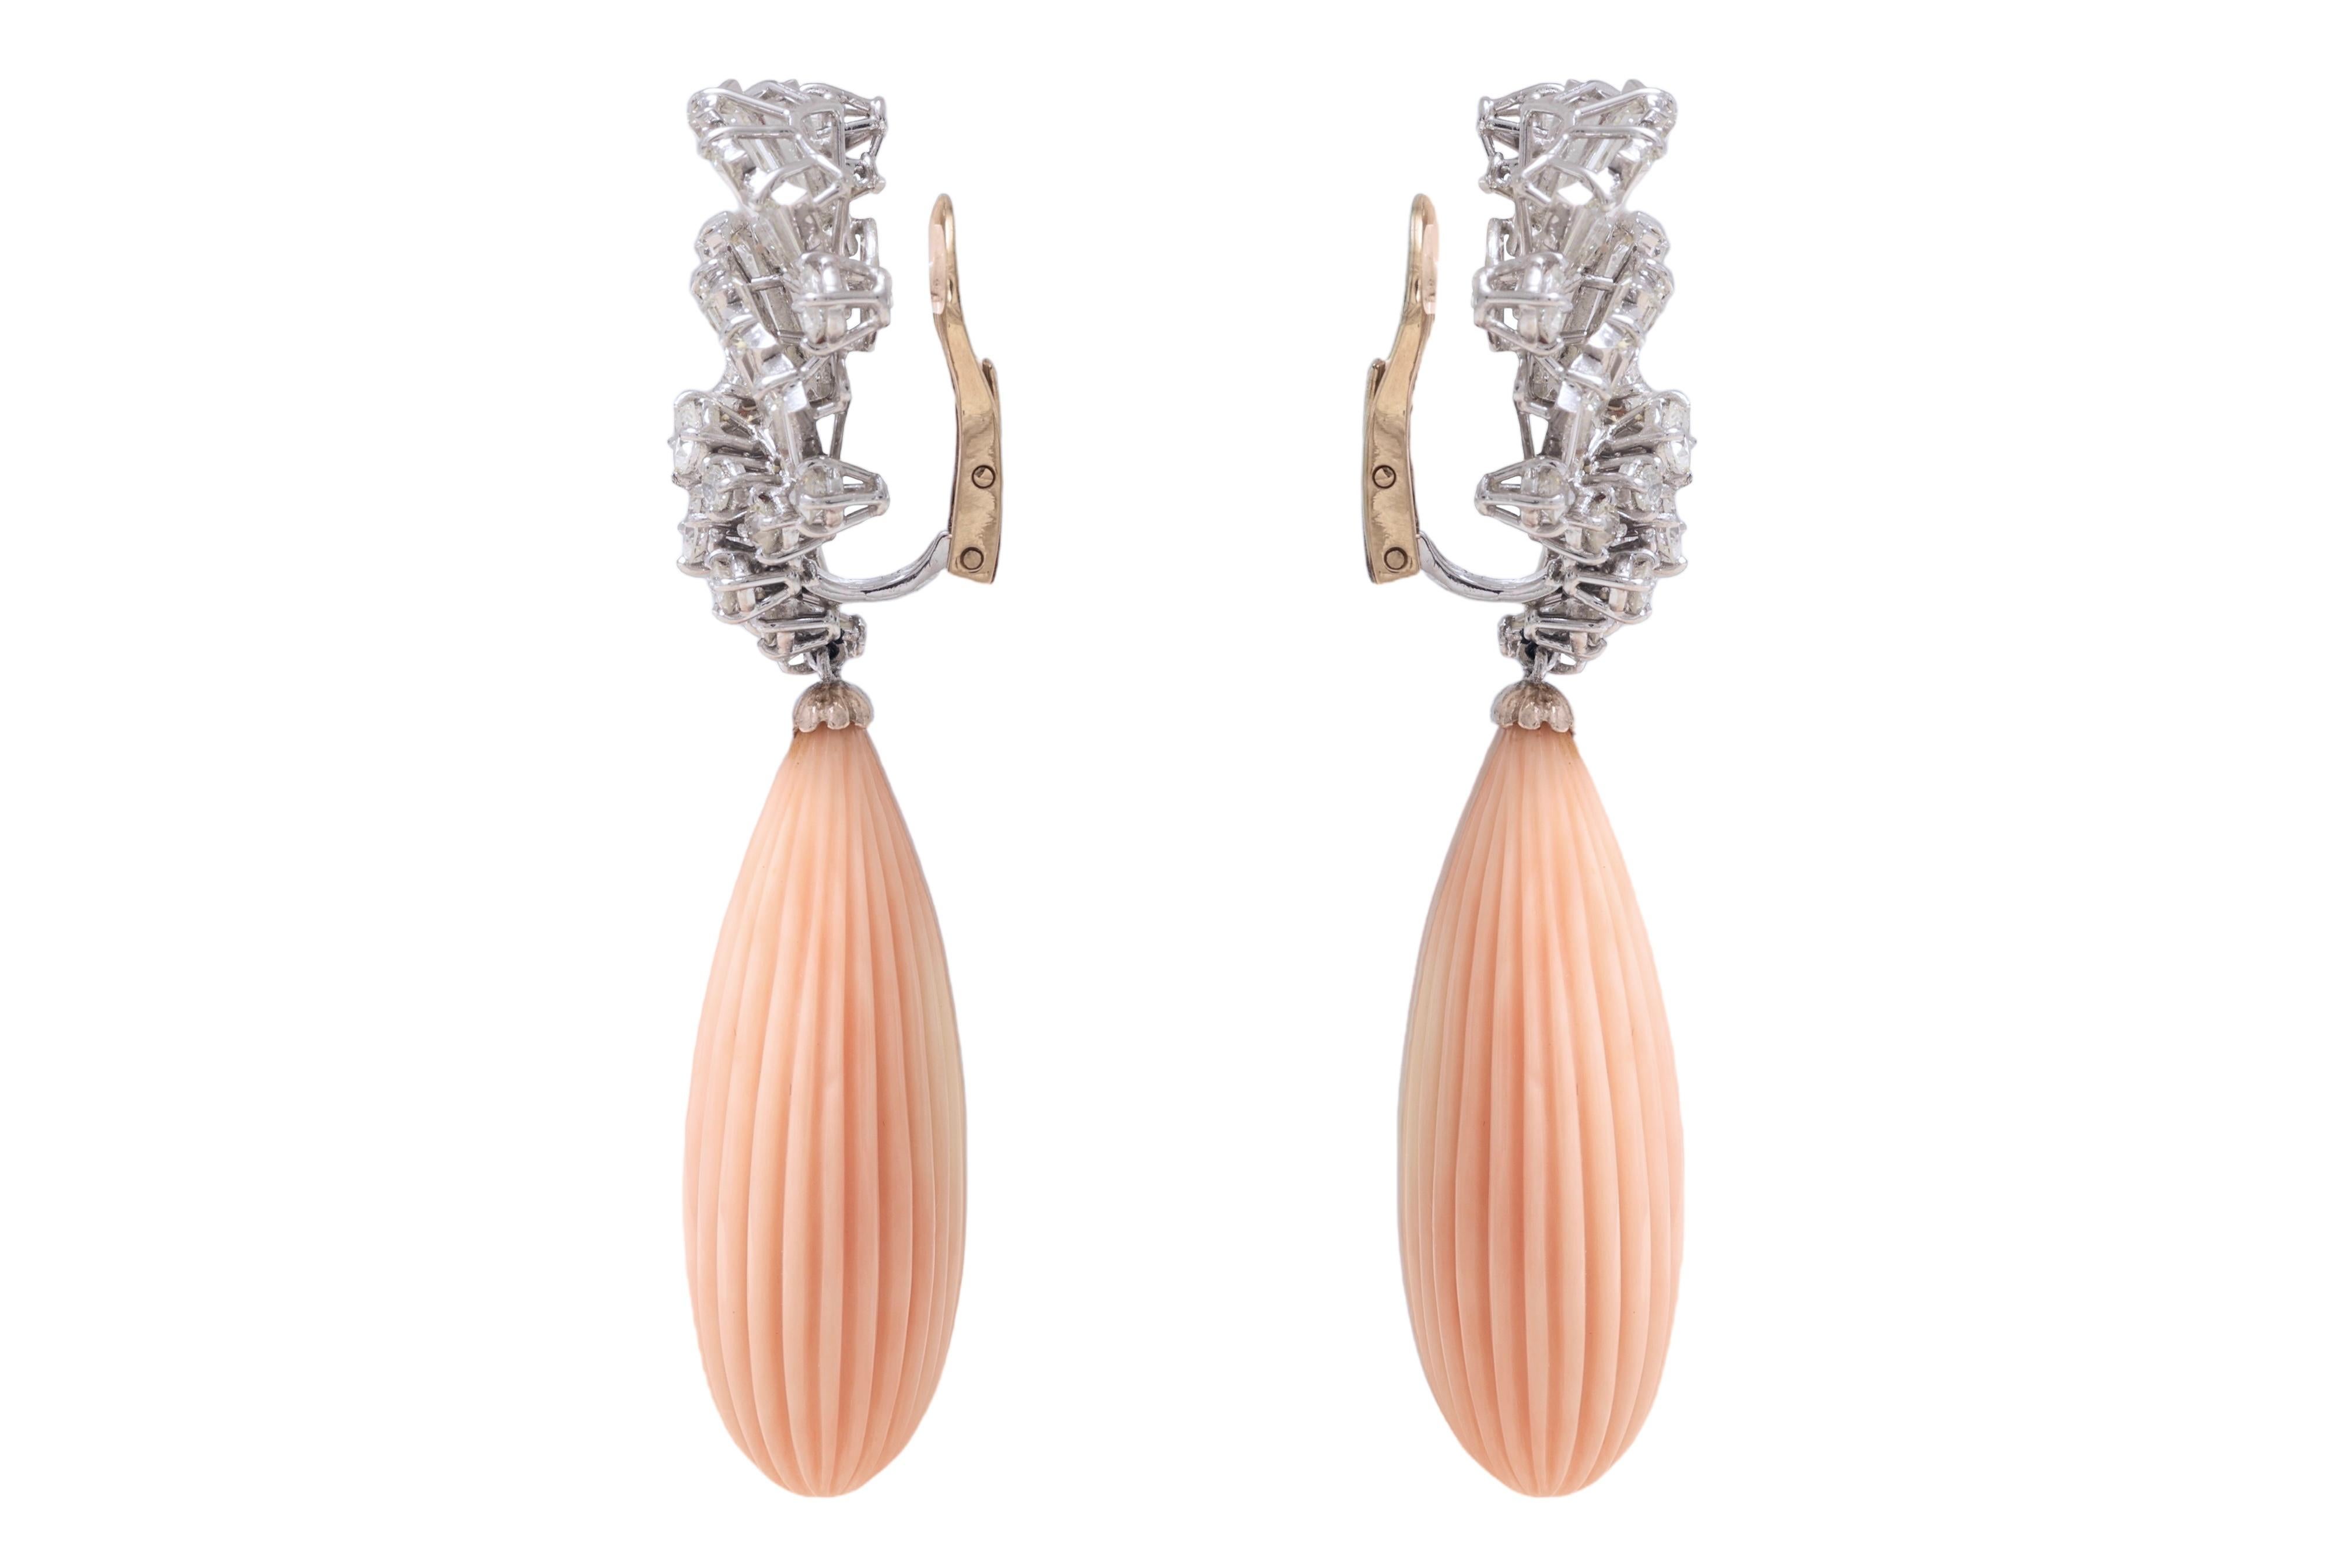 Asprey London Set Necklace & Earrings Coral&Diamond, Gübelin, Estate Sultan Oman For Sale 6